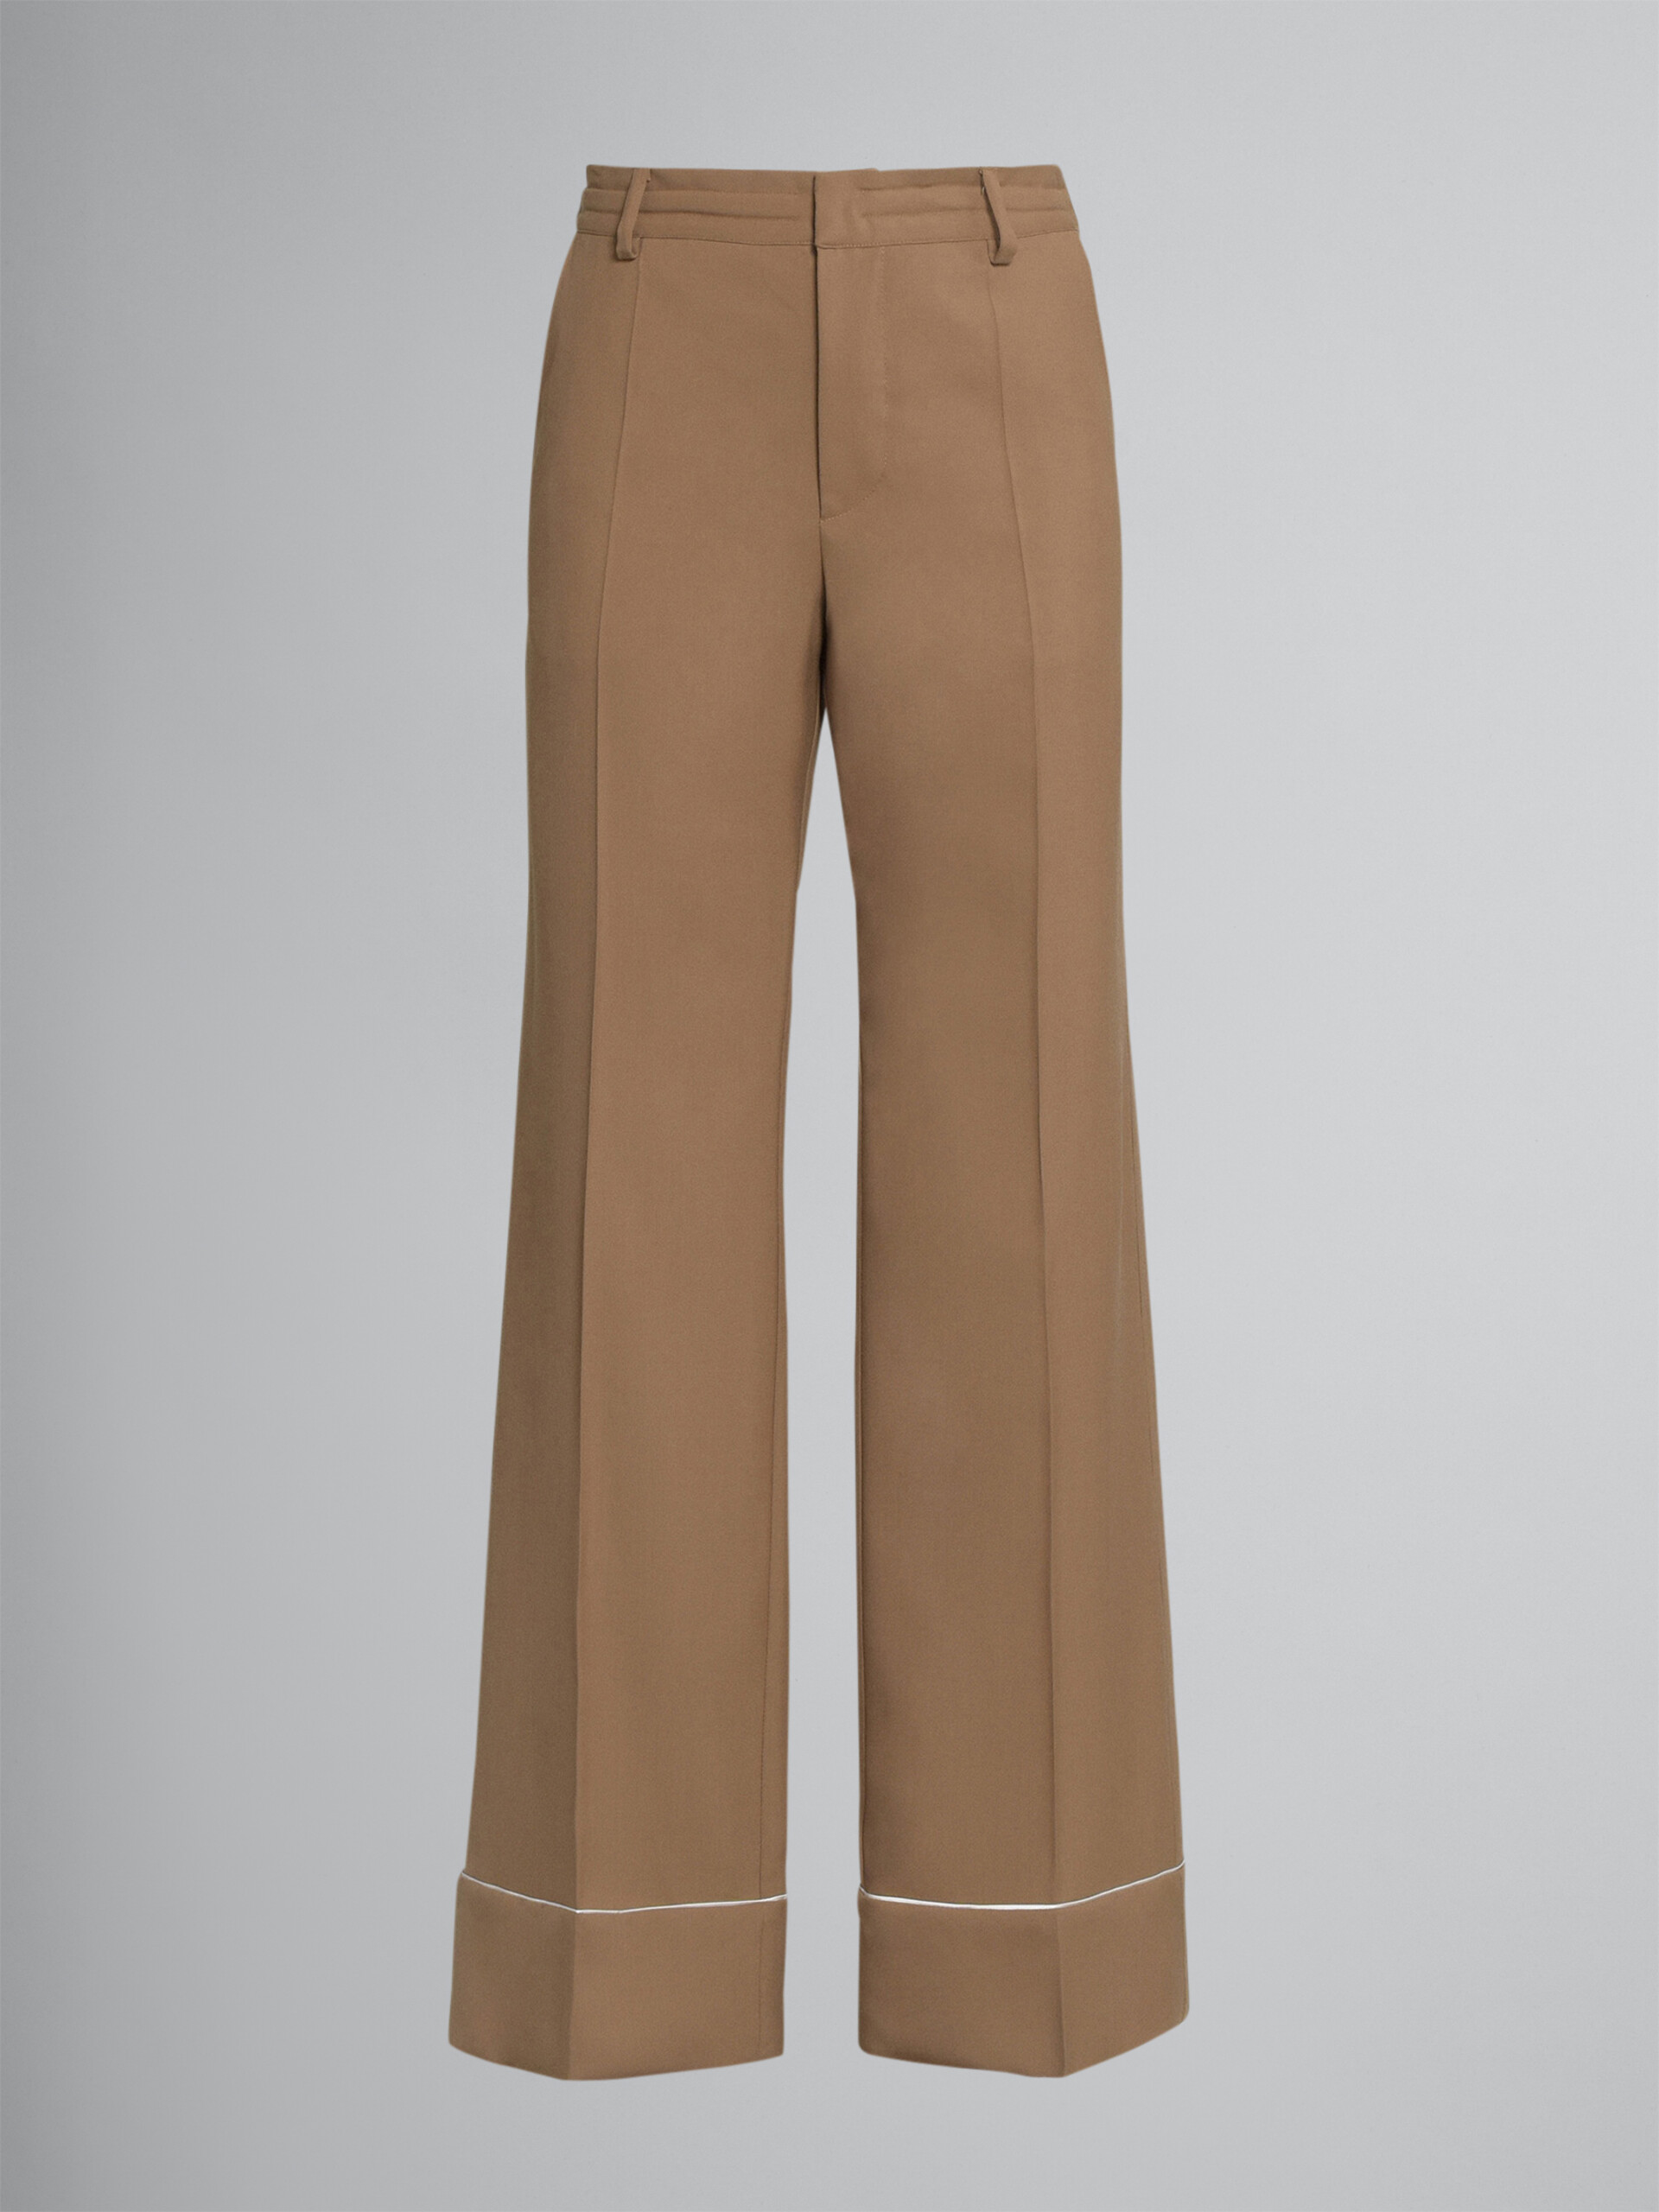 Tropical wool pants - Pants - Image 1